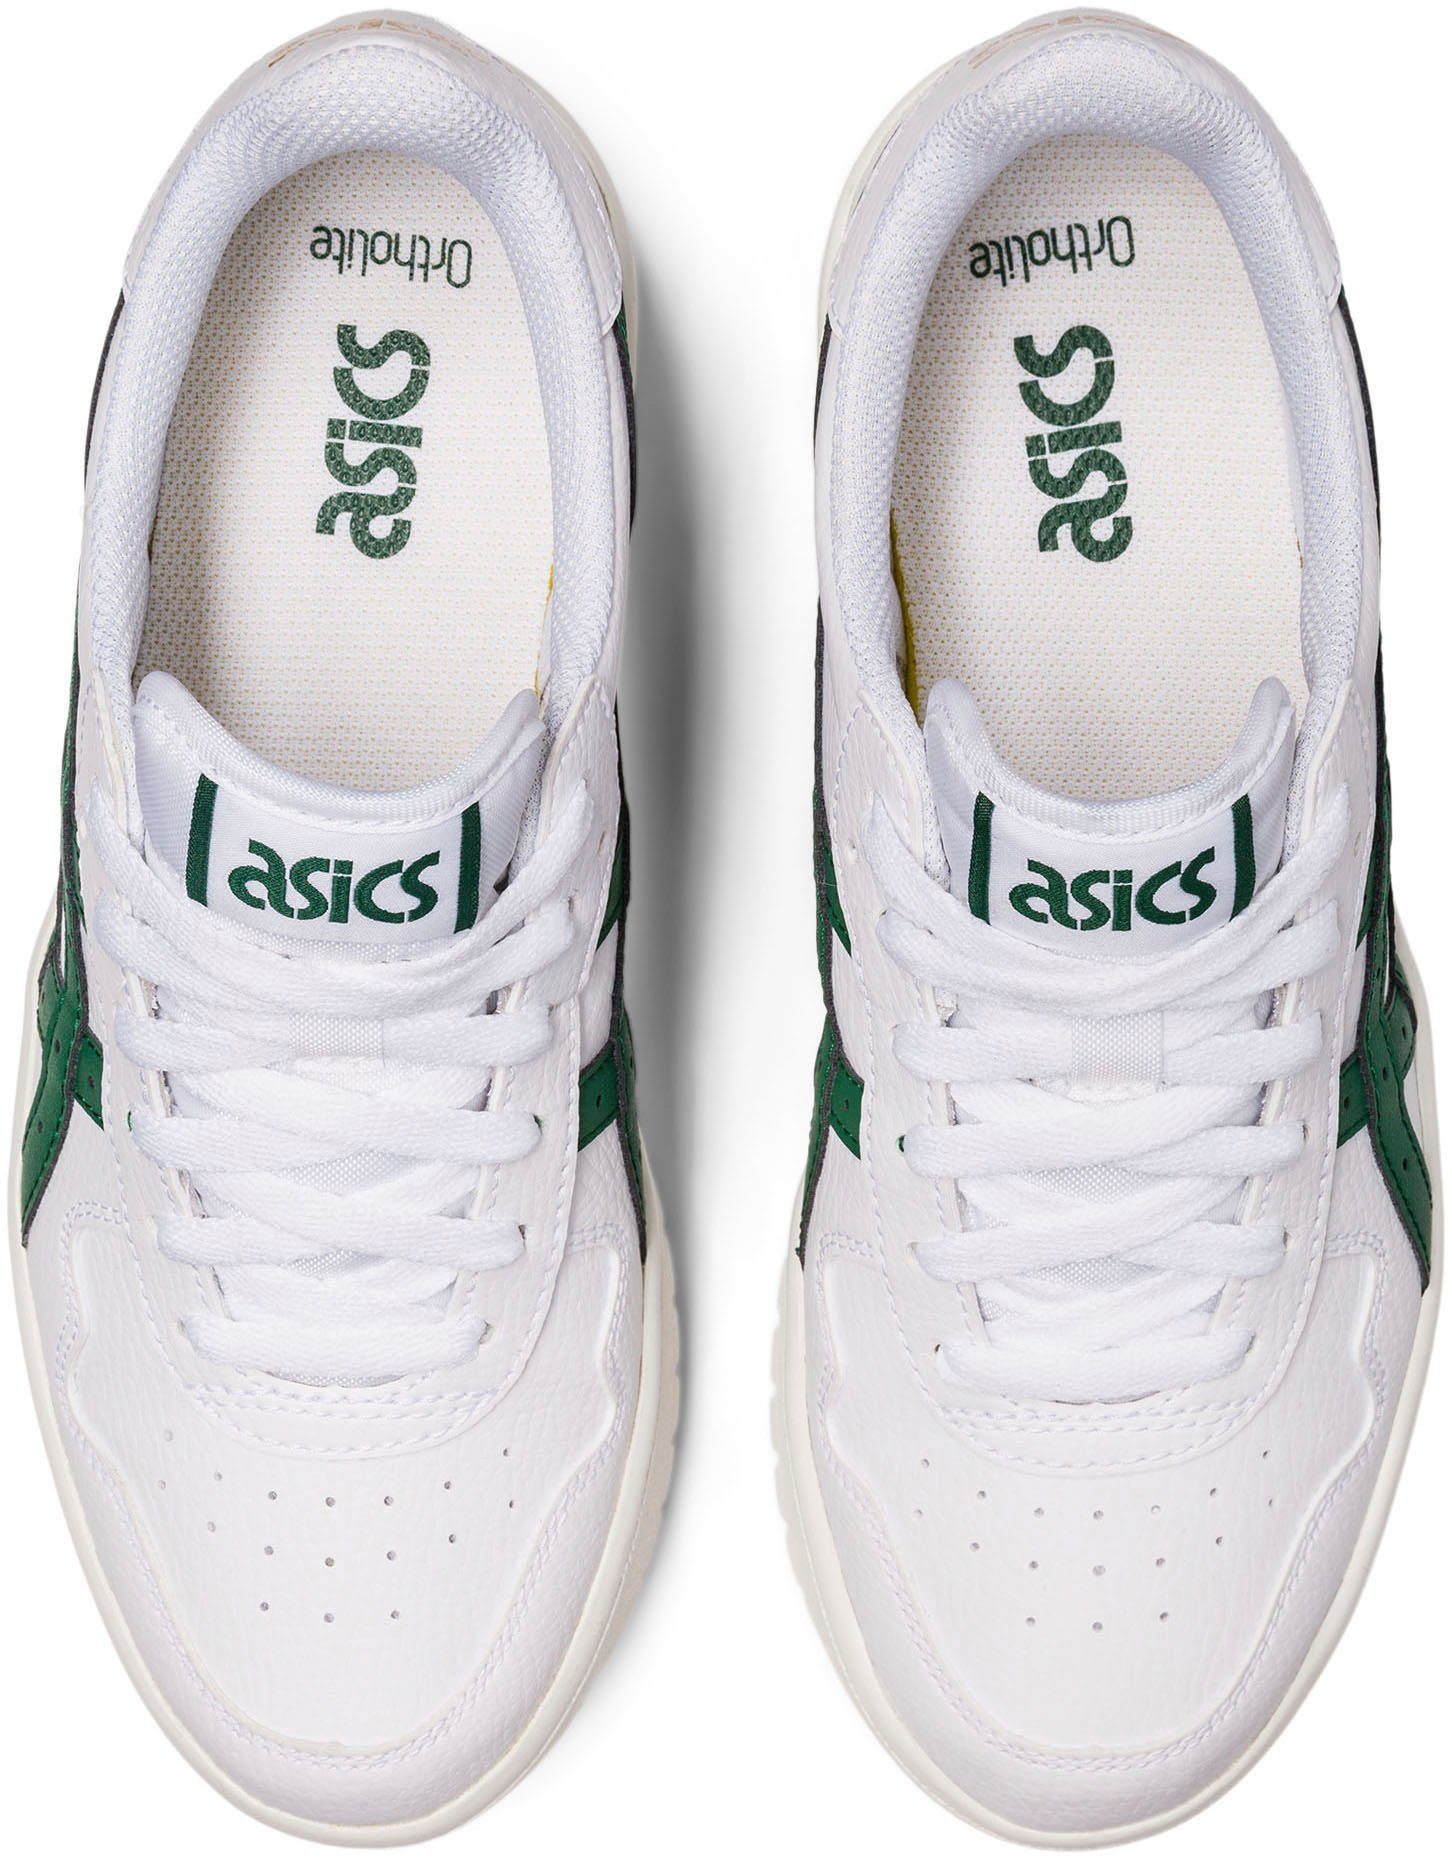 ASICS SportStyle JAPAN S Sneaker weiß-grün PF